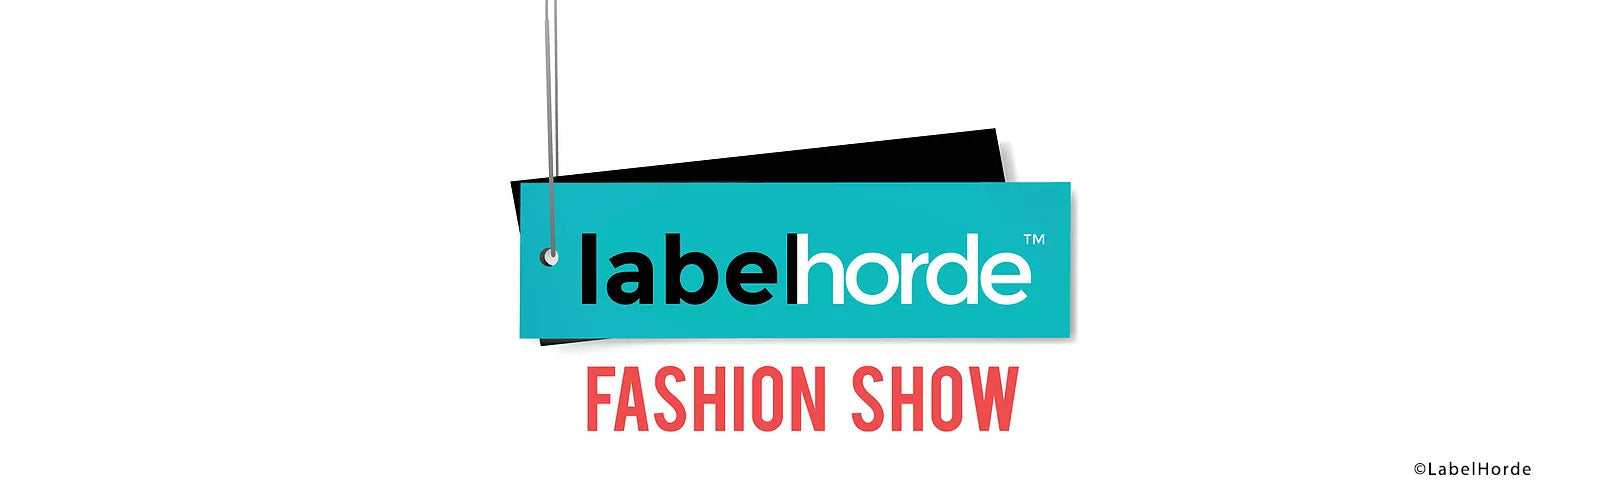 LabelHorde Fashion Show